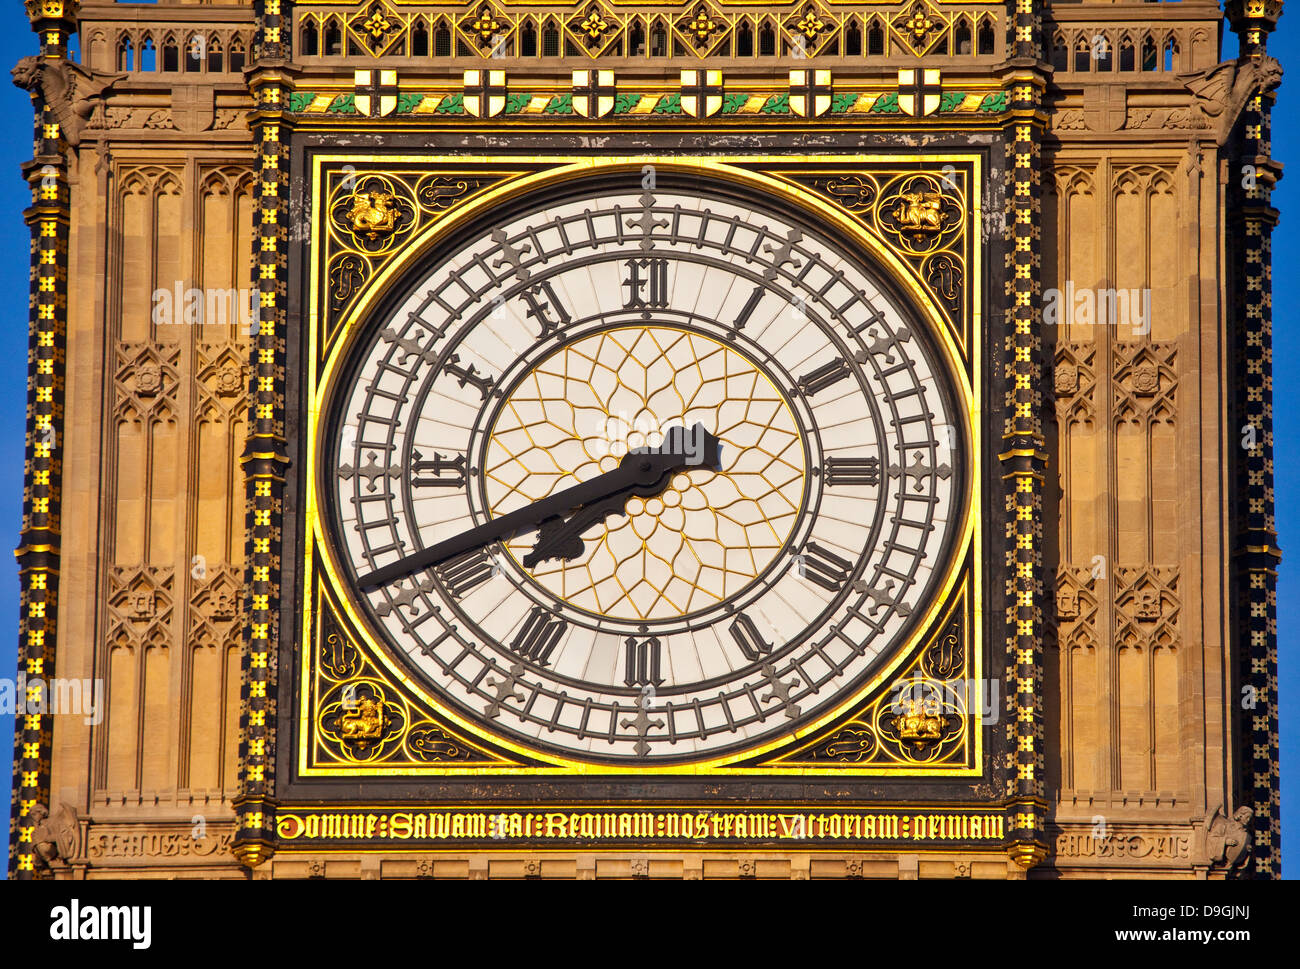 La célèbre horloge de Big Ben (les chambres du Parlement) à Londres. Banque D'Images